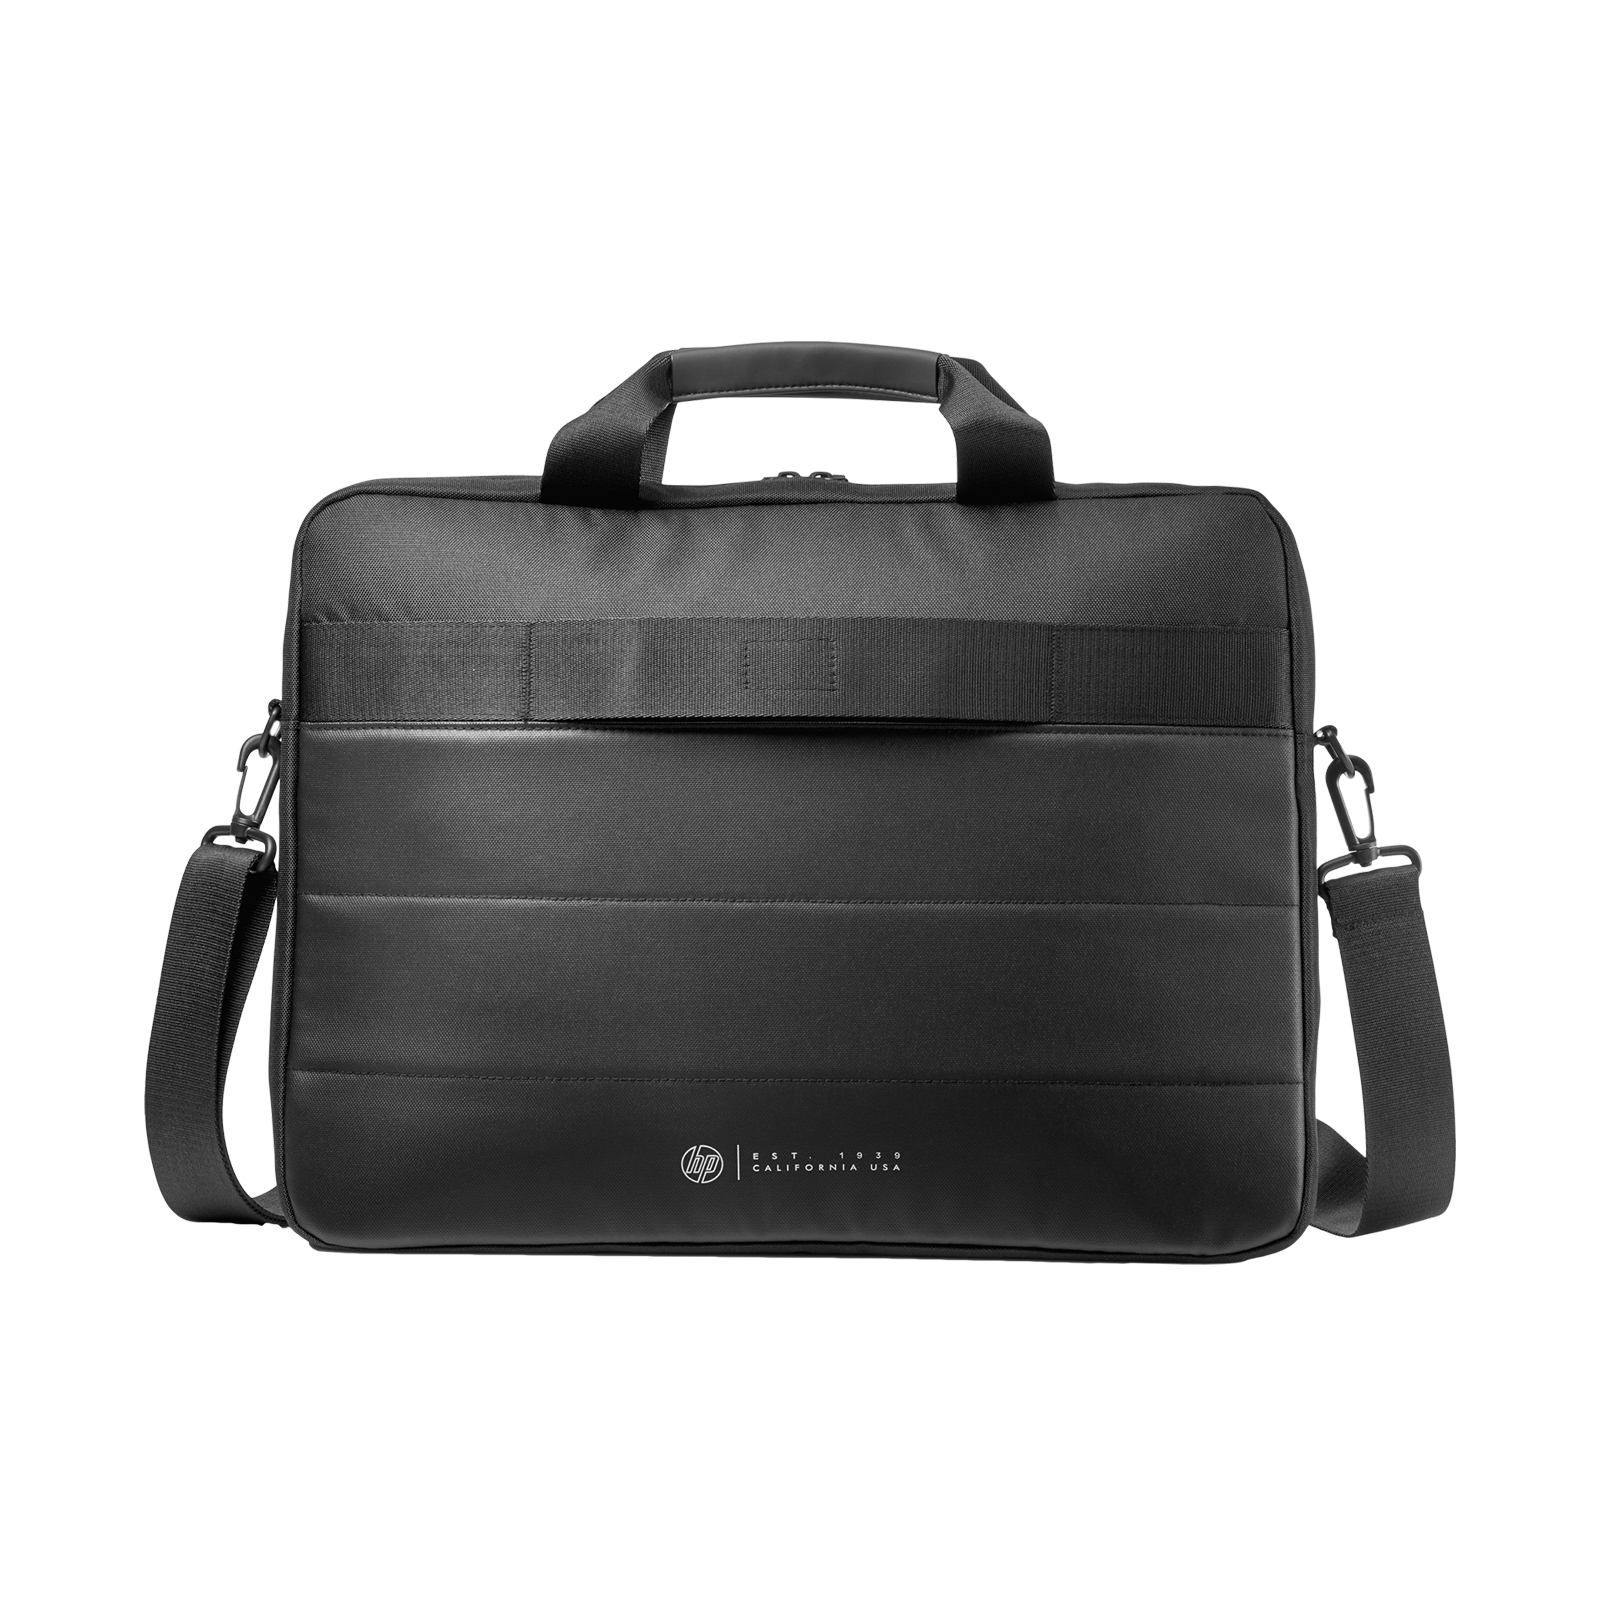 Details 76+ hp laptop sling bag - in.duhocakina